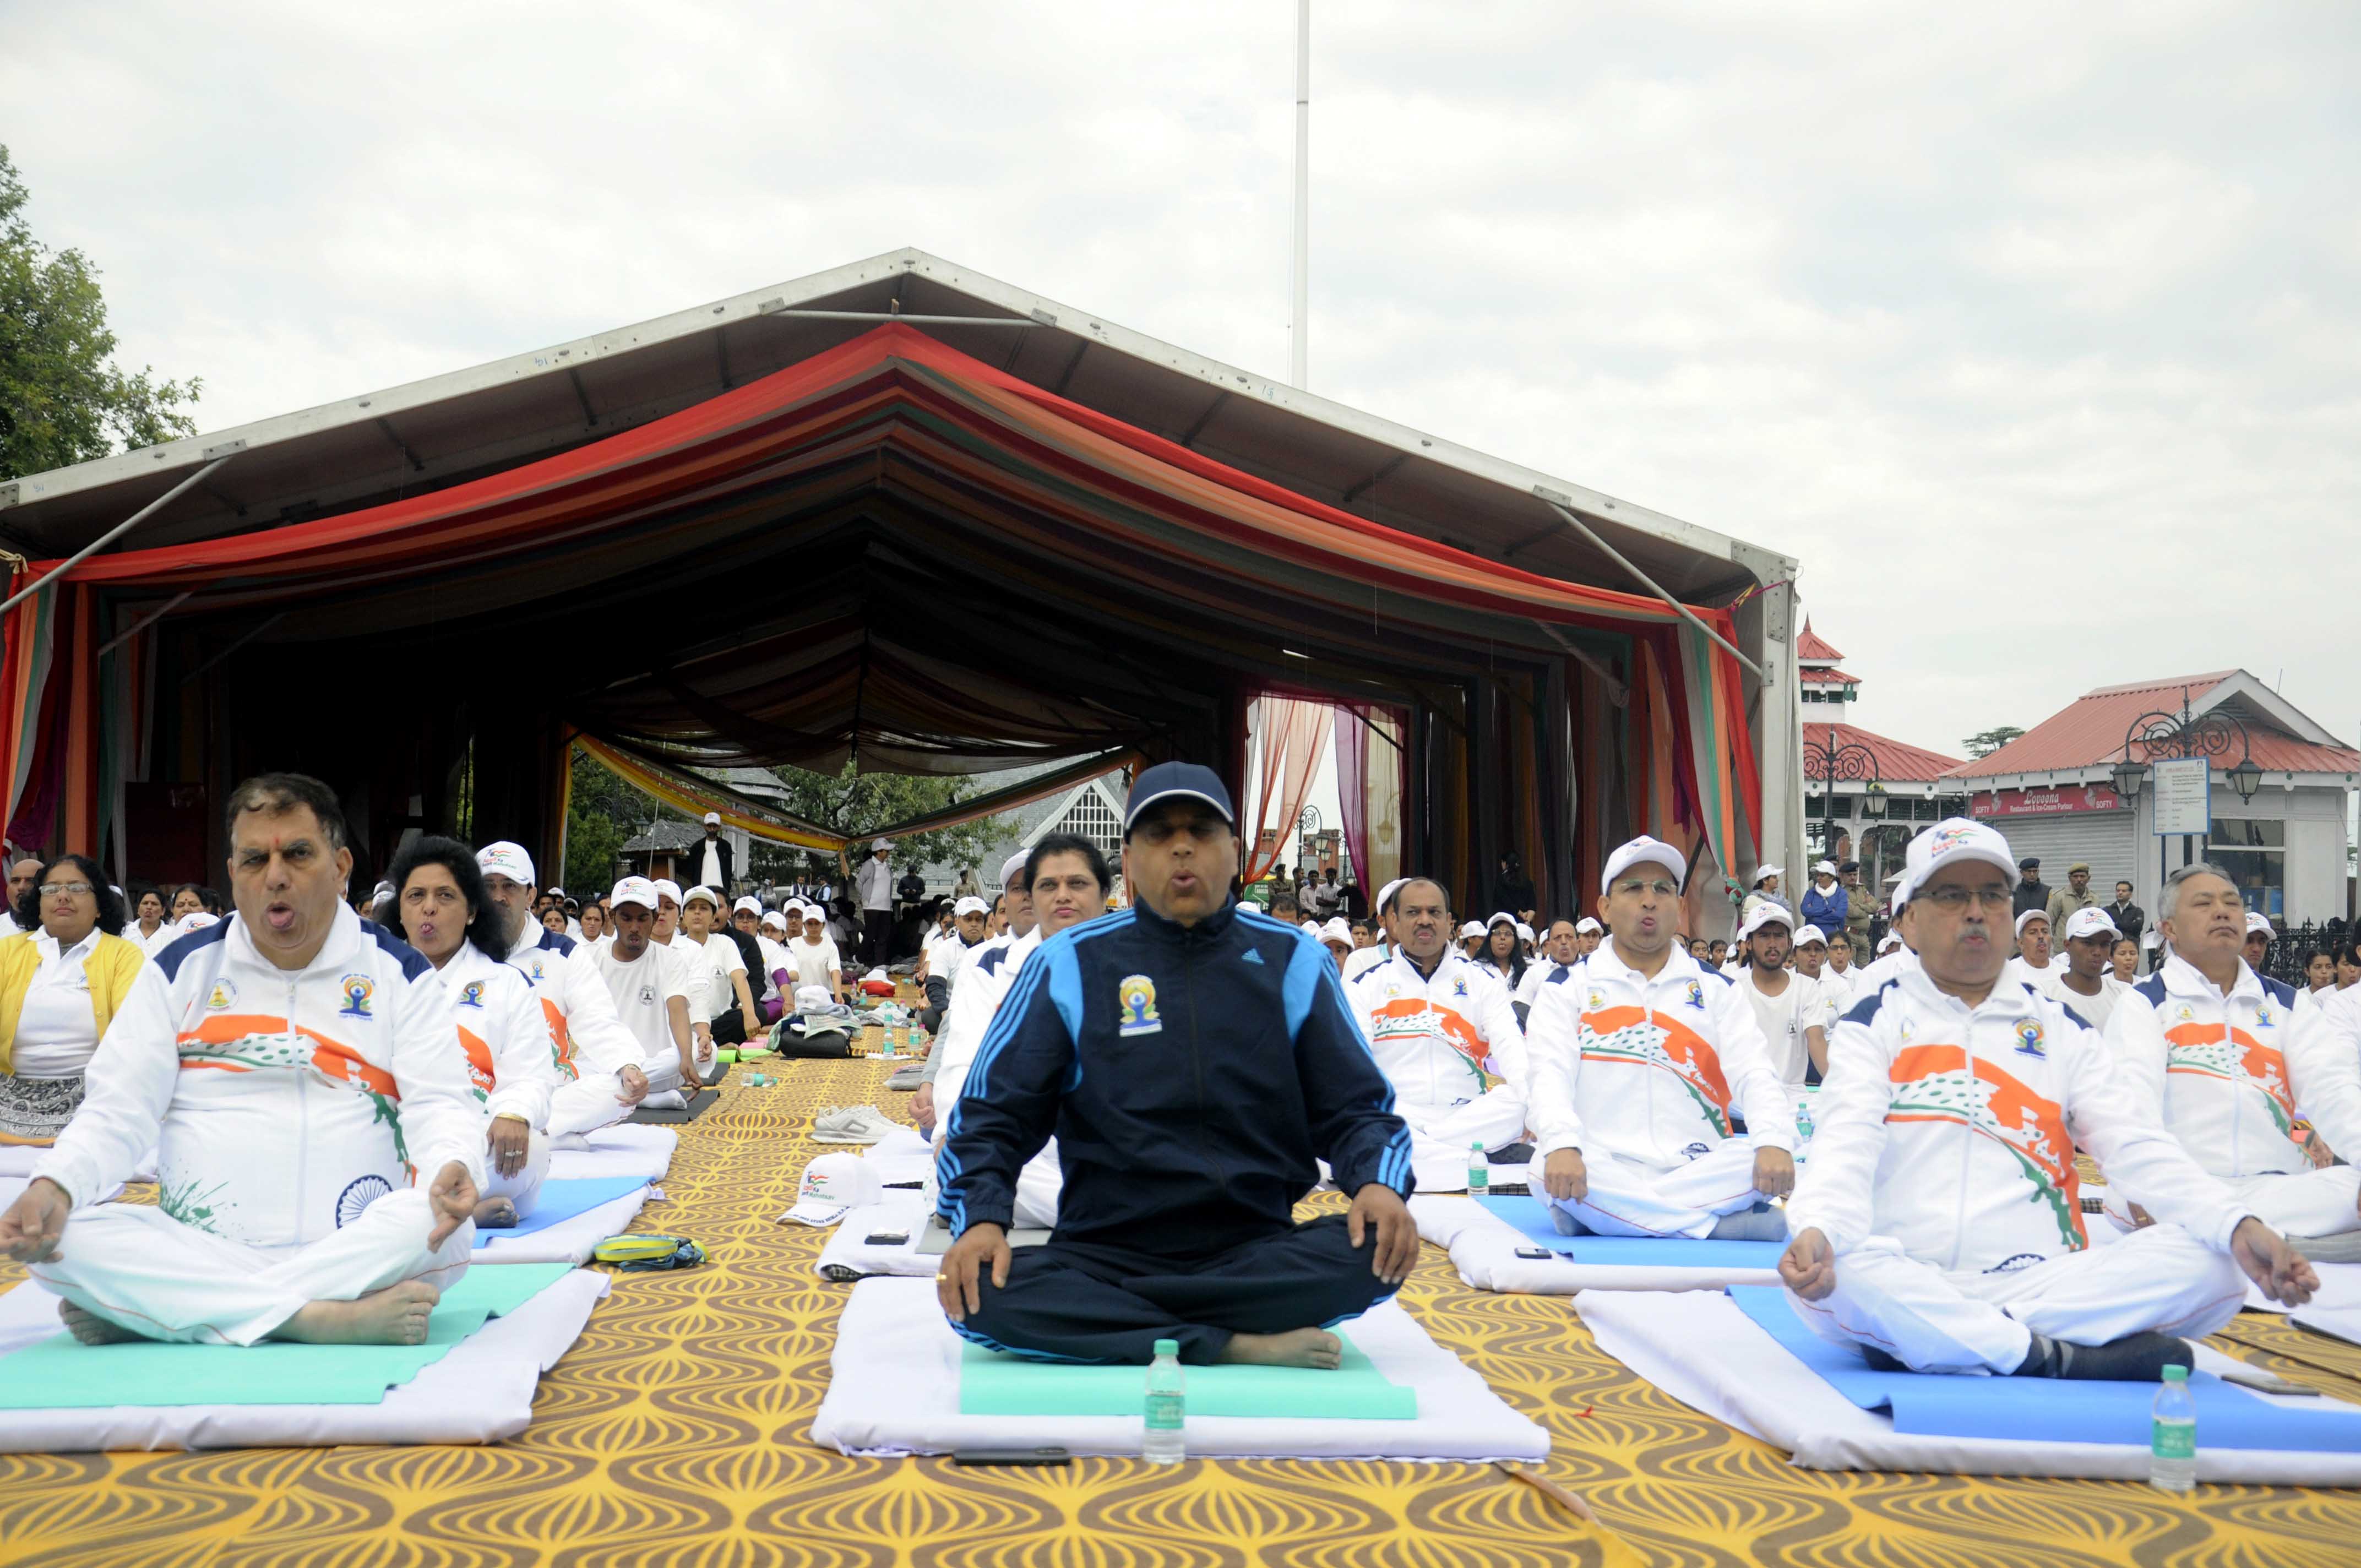 Yoga helps control mind & soul, instils discipline: Himachal CM Jai Ram Thakur